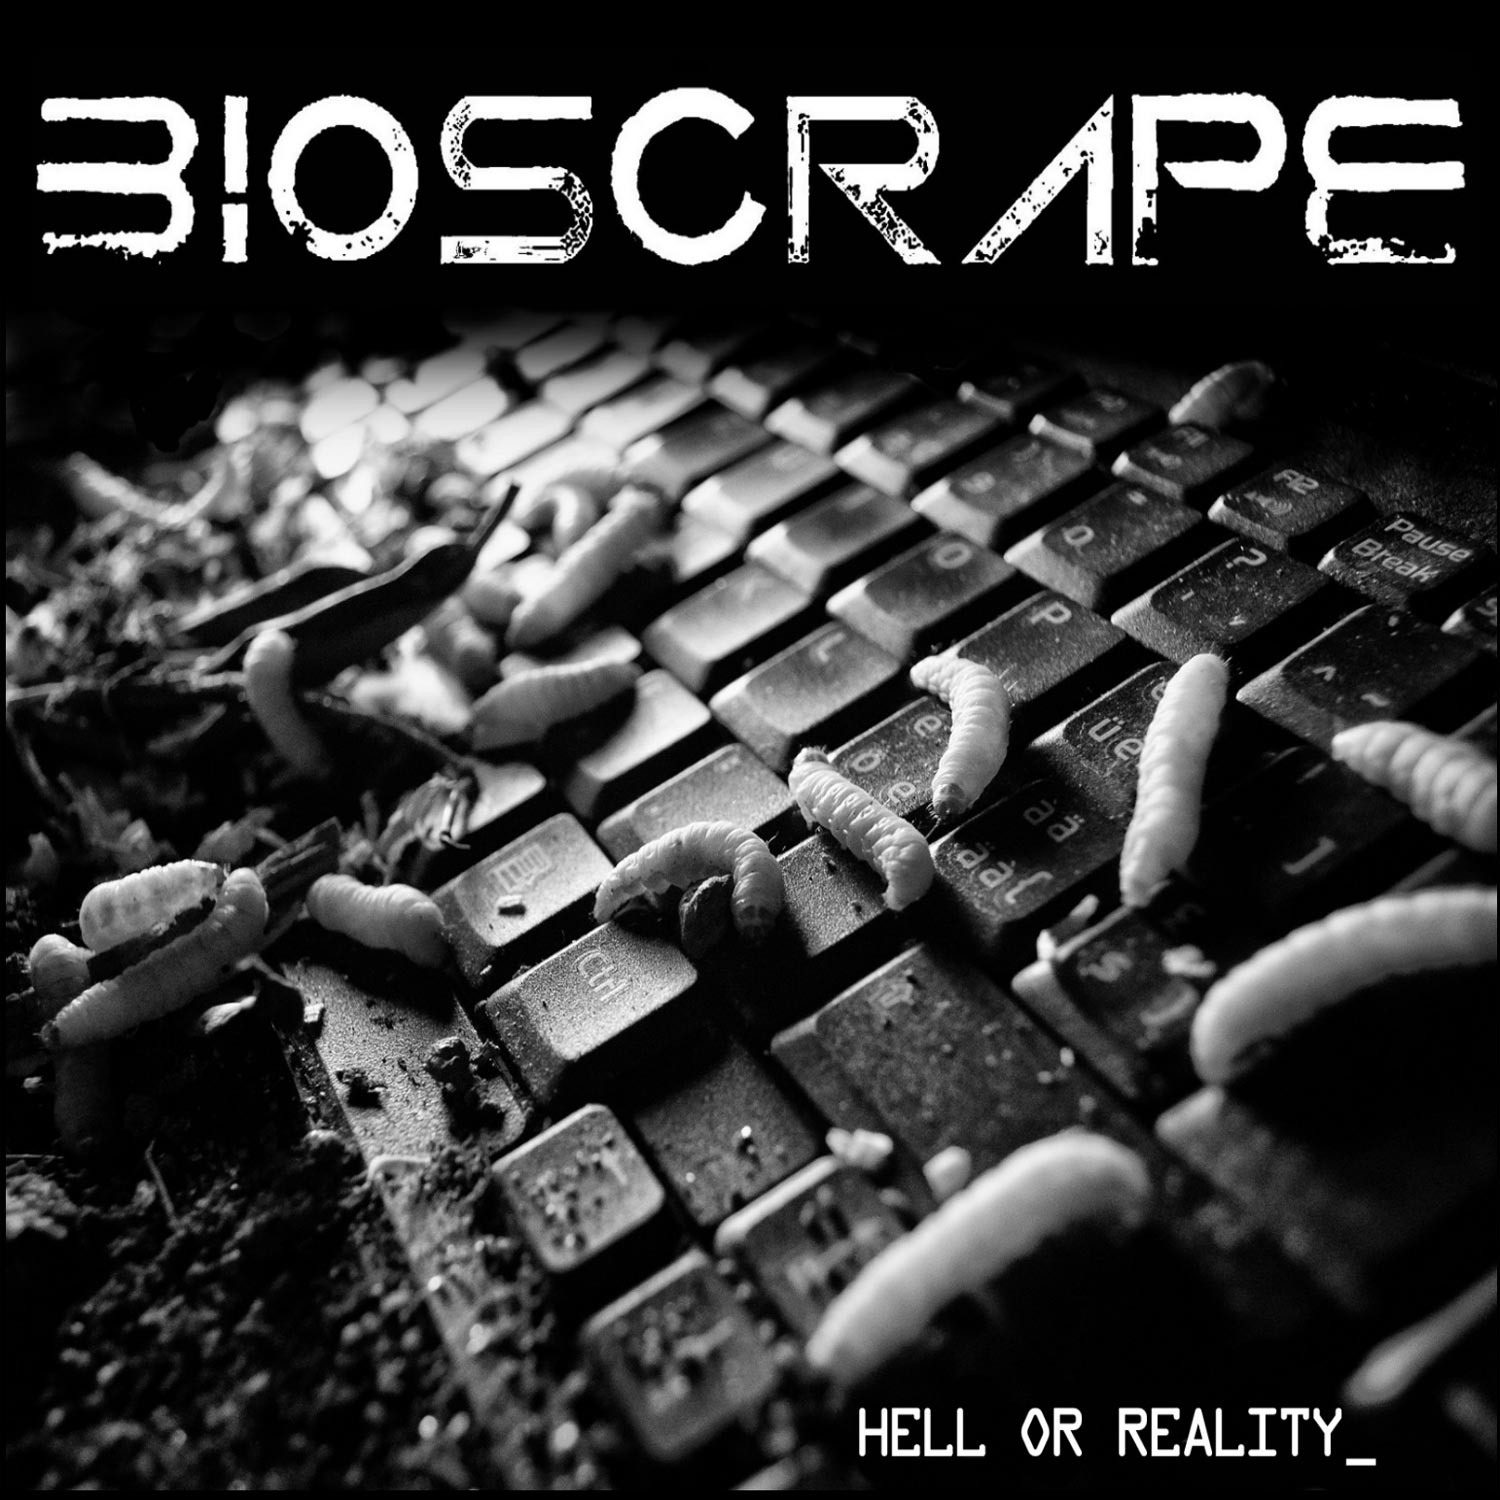 Bioscrape – “Hell Or Reality”